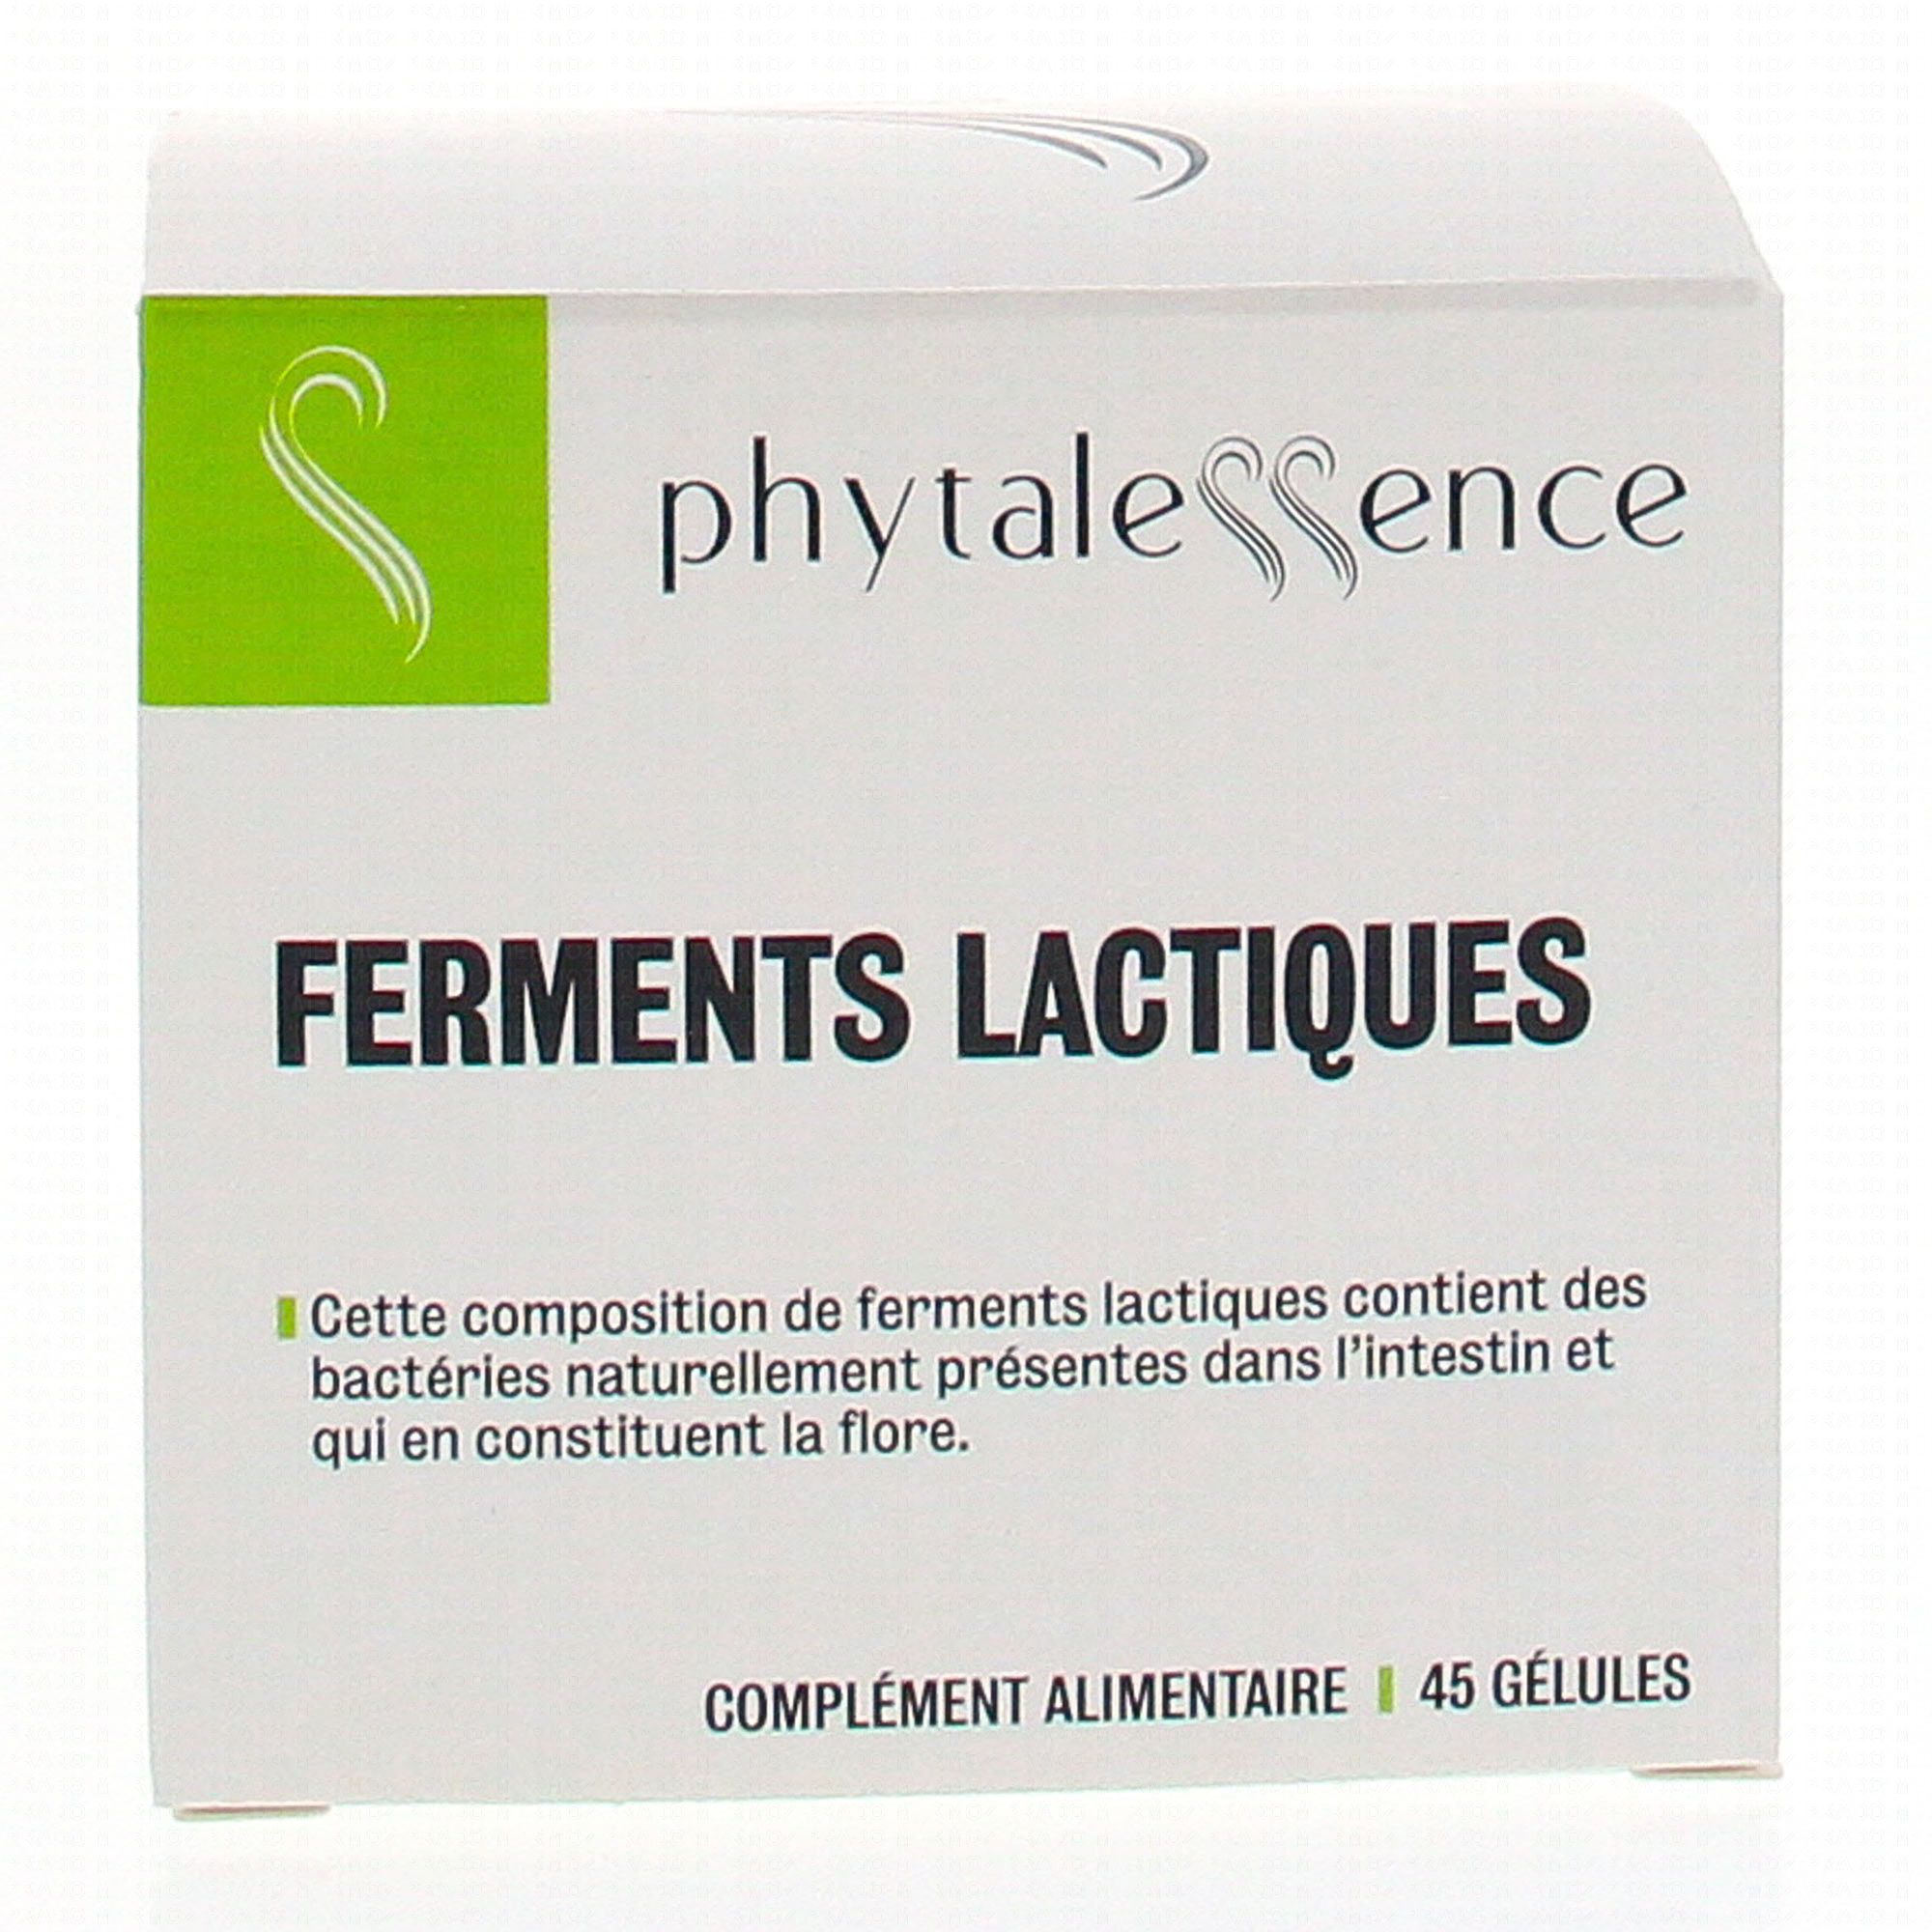 PHYTALESSENCE Ferments lactiques - Pharmacie Prado Mermoz